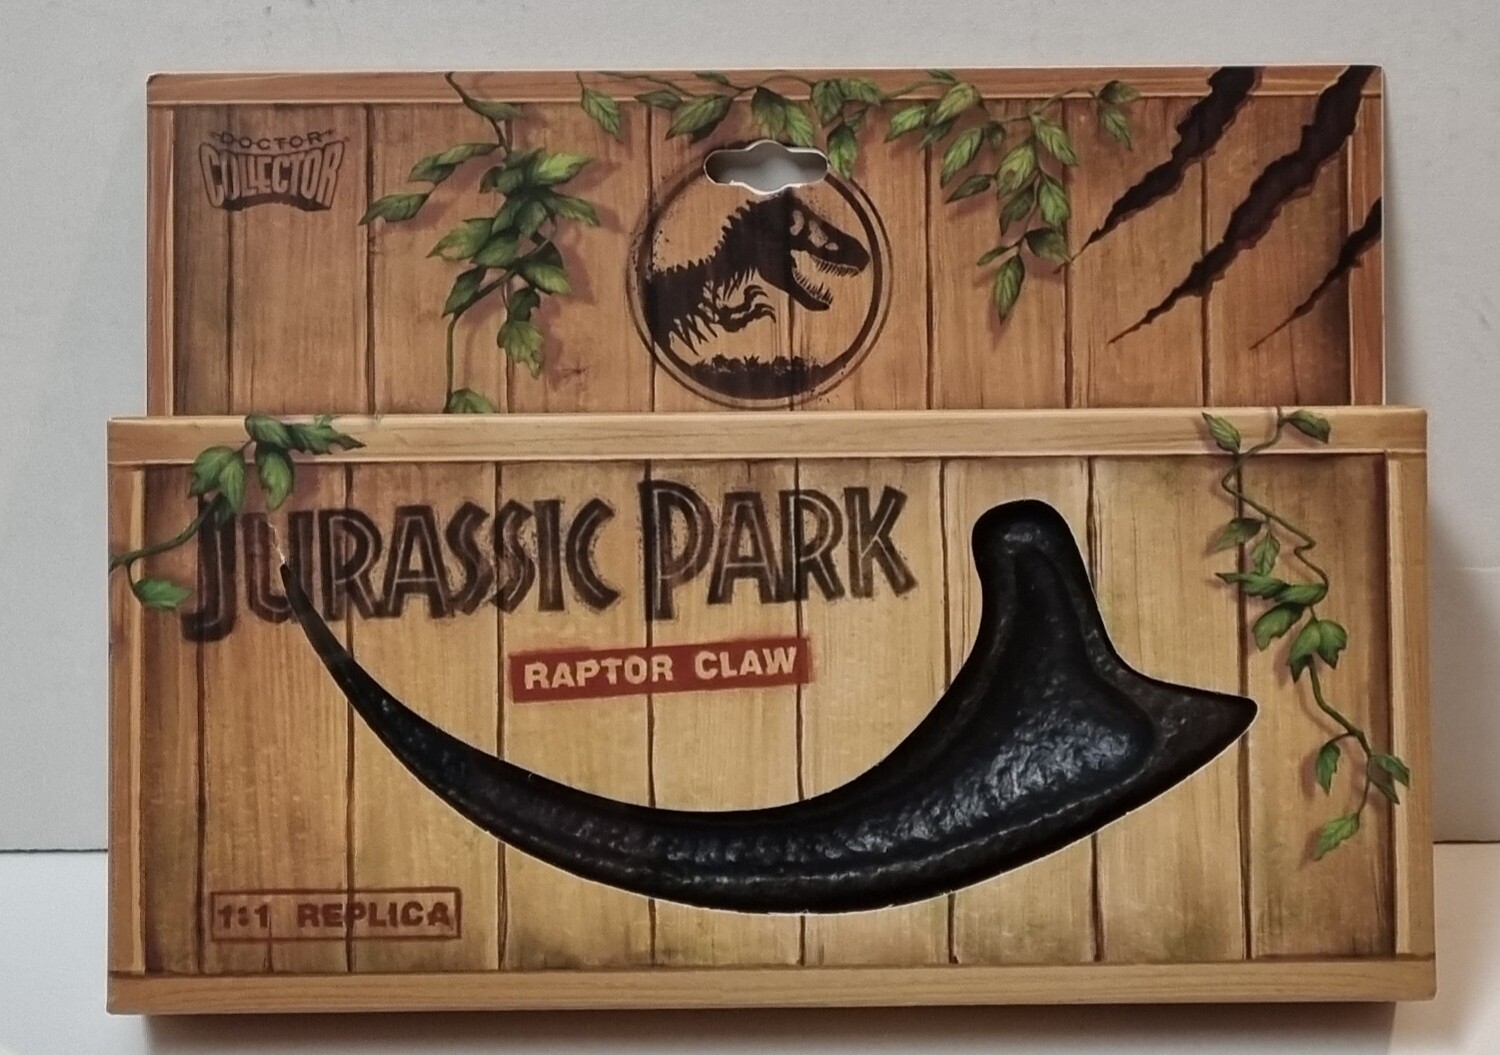 Raptor Claw, Jurassic Park, 1:1 Replica